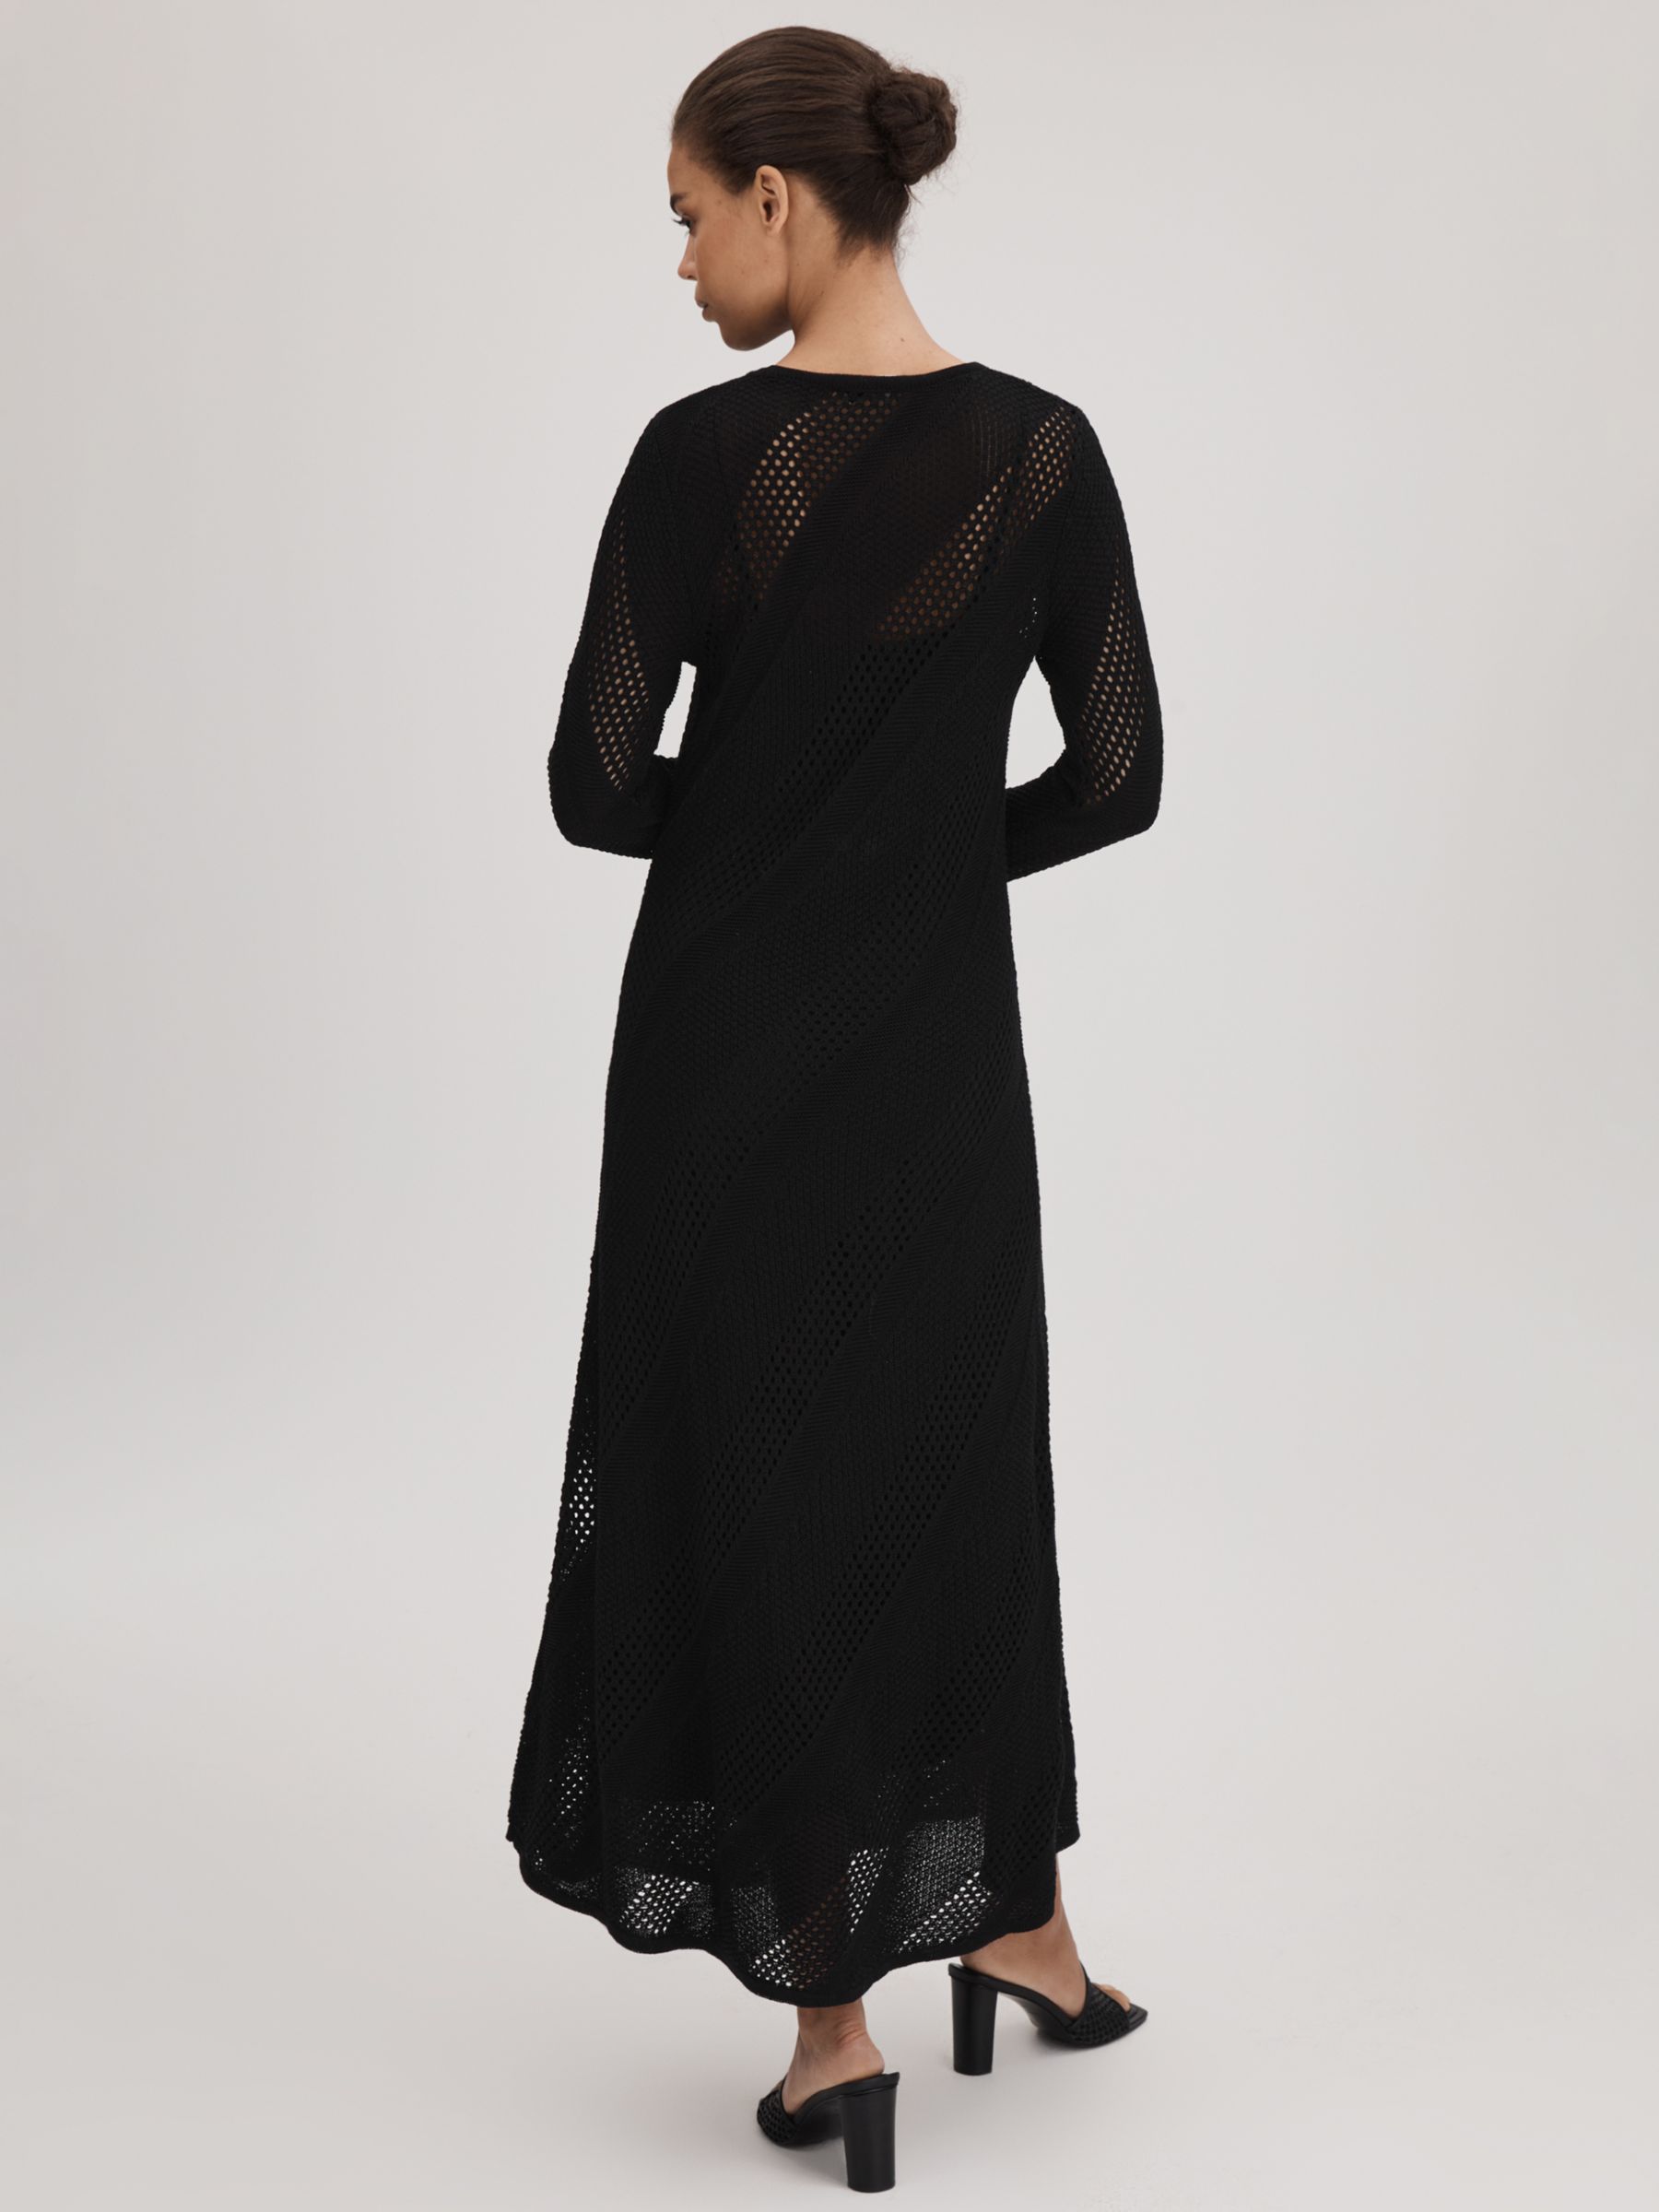 FLORERE Crochet Midaxi Dress, Black, 10